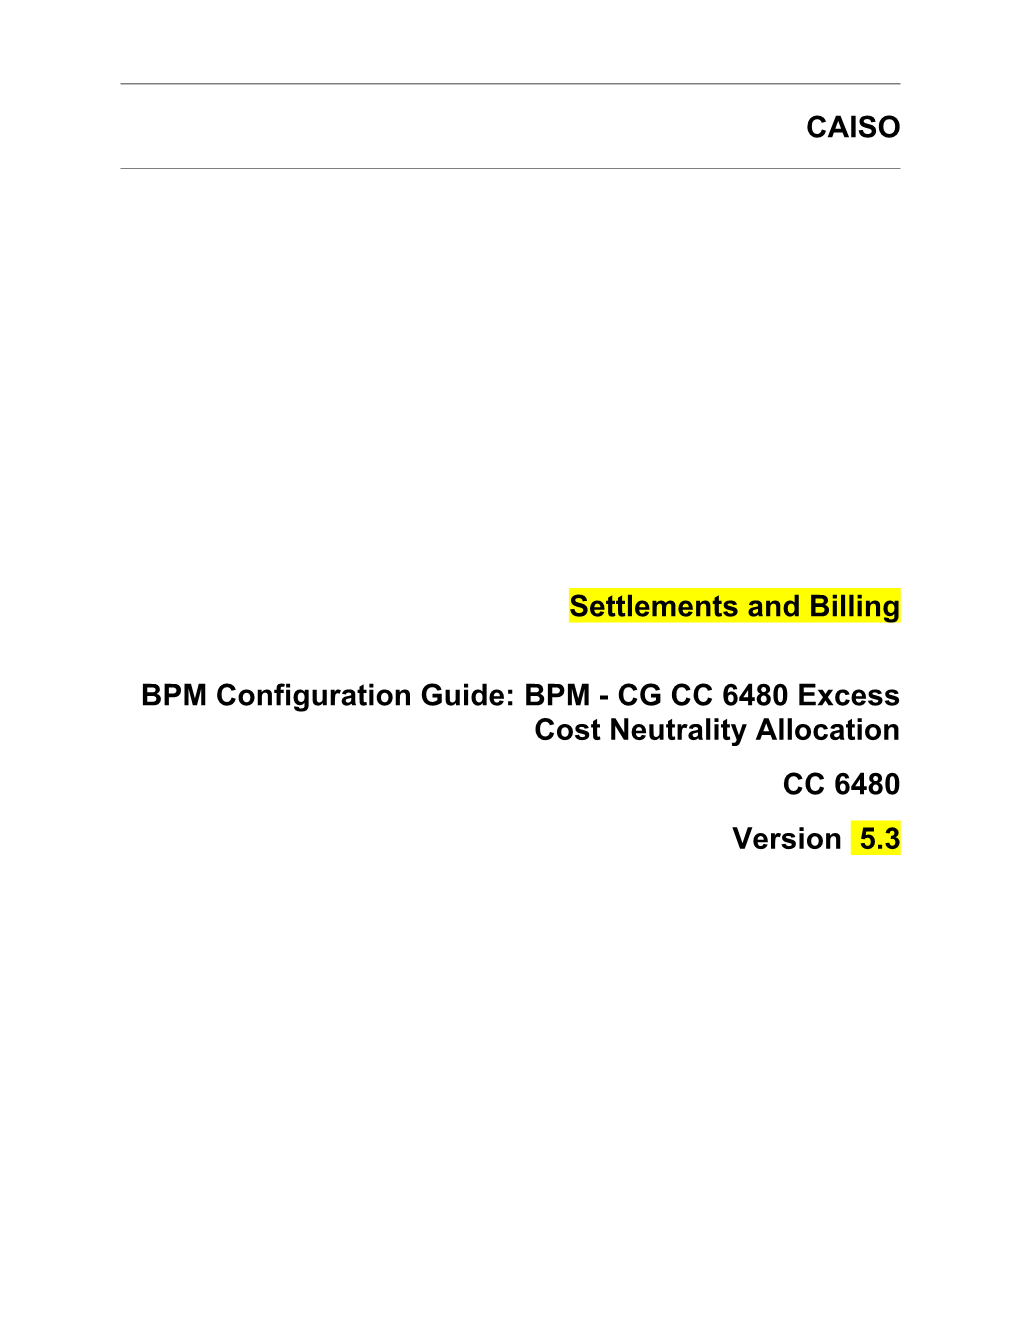 BPM - CG CC 6480 Excess Cost Neutrality Allocation